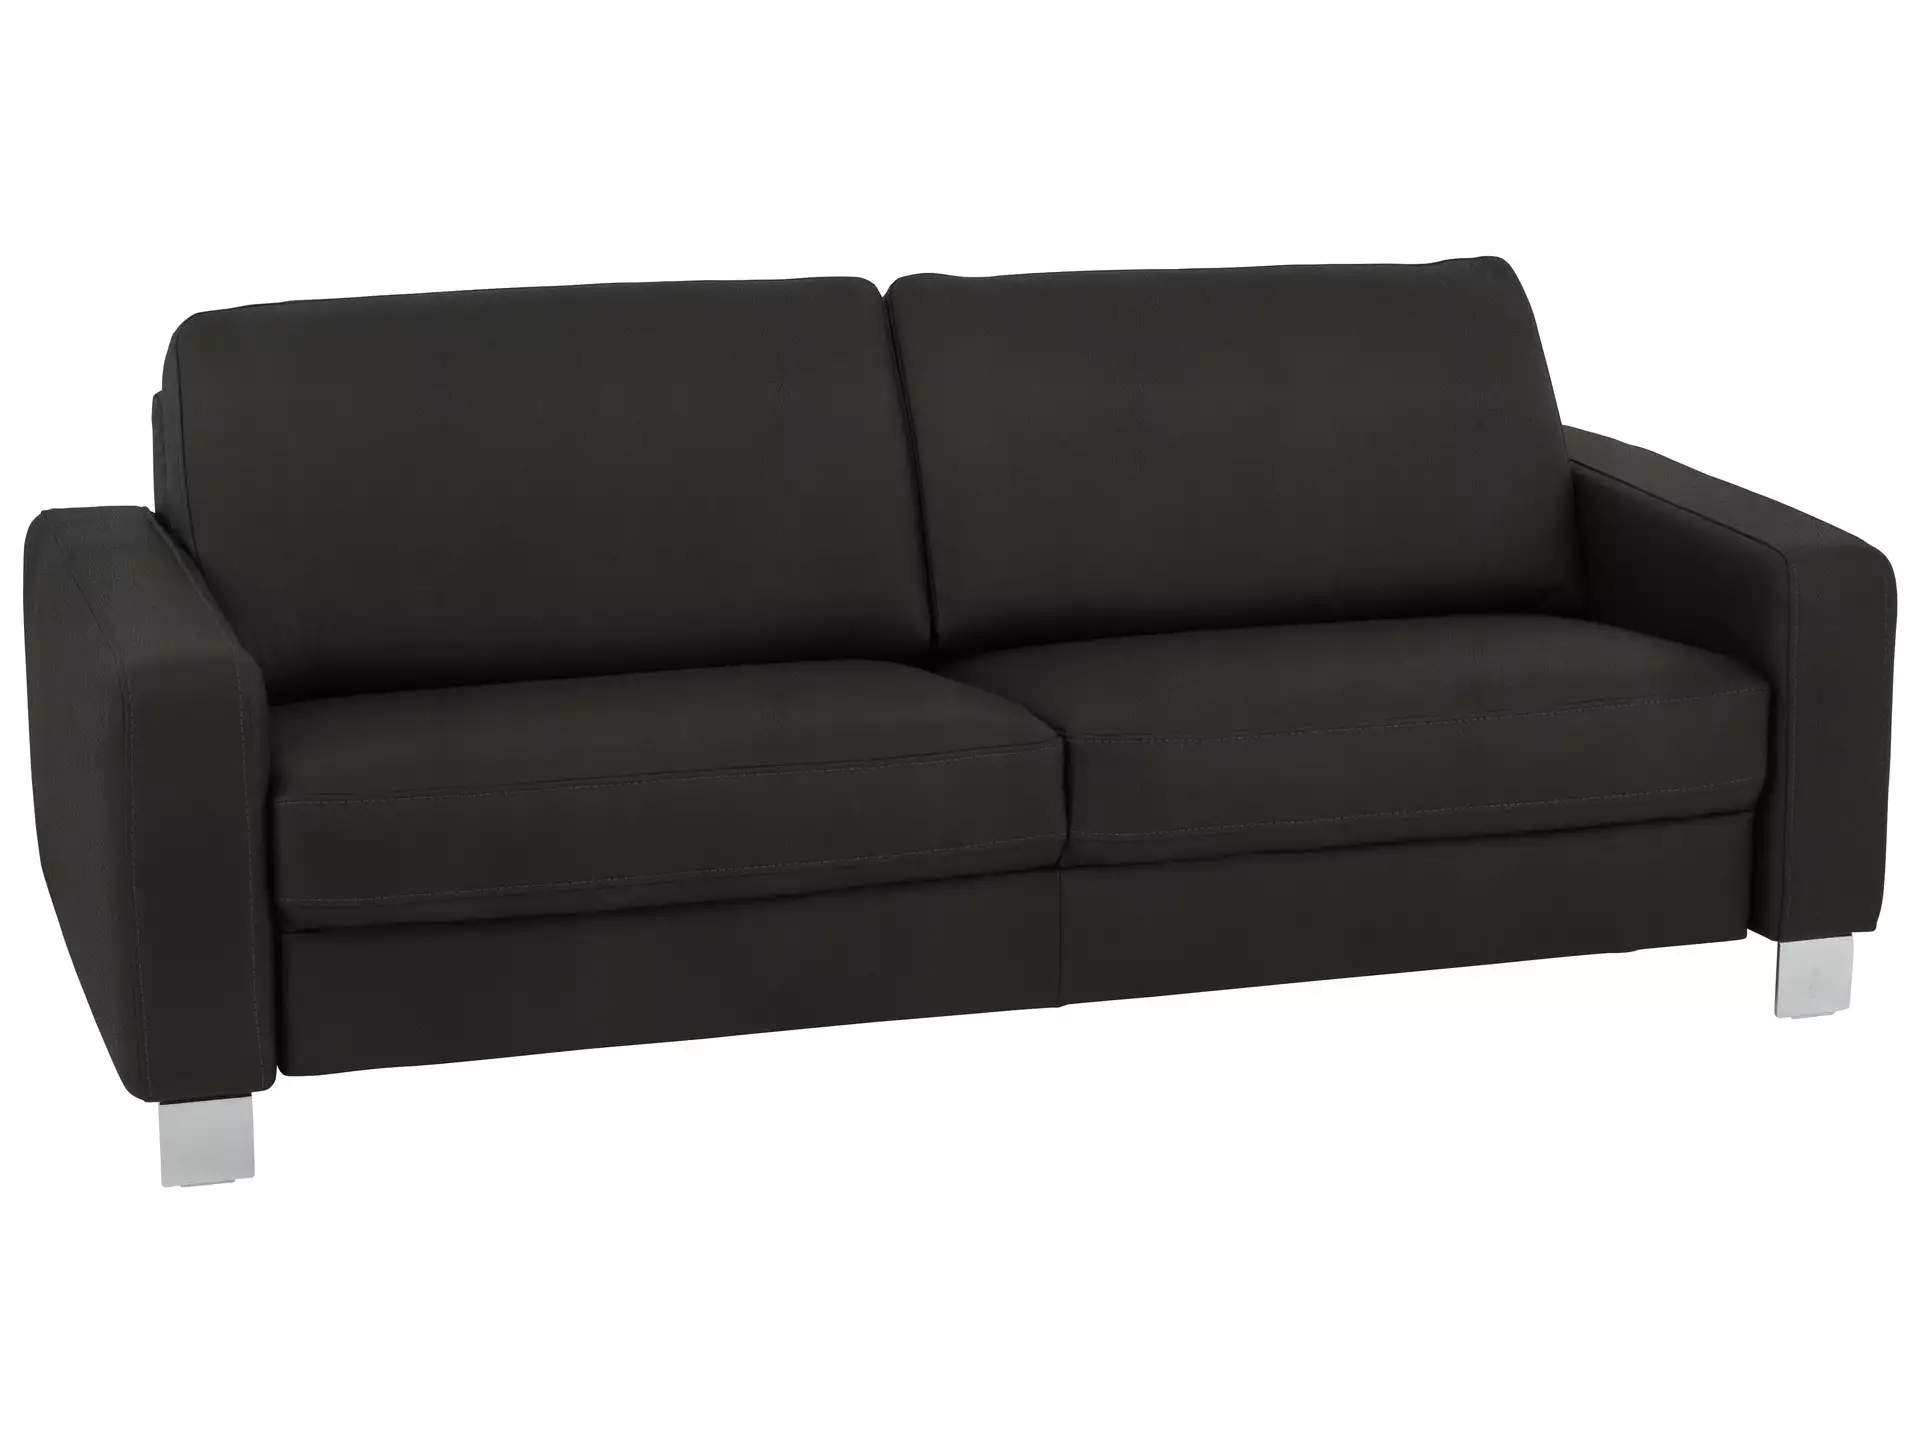 Sofa Shetland Basic B: 214 cm Polipol / Farbe: Anthrazit / Material: Leder Basic